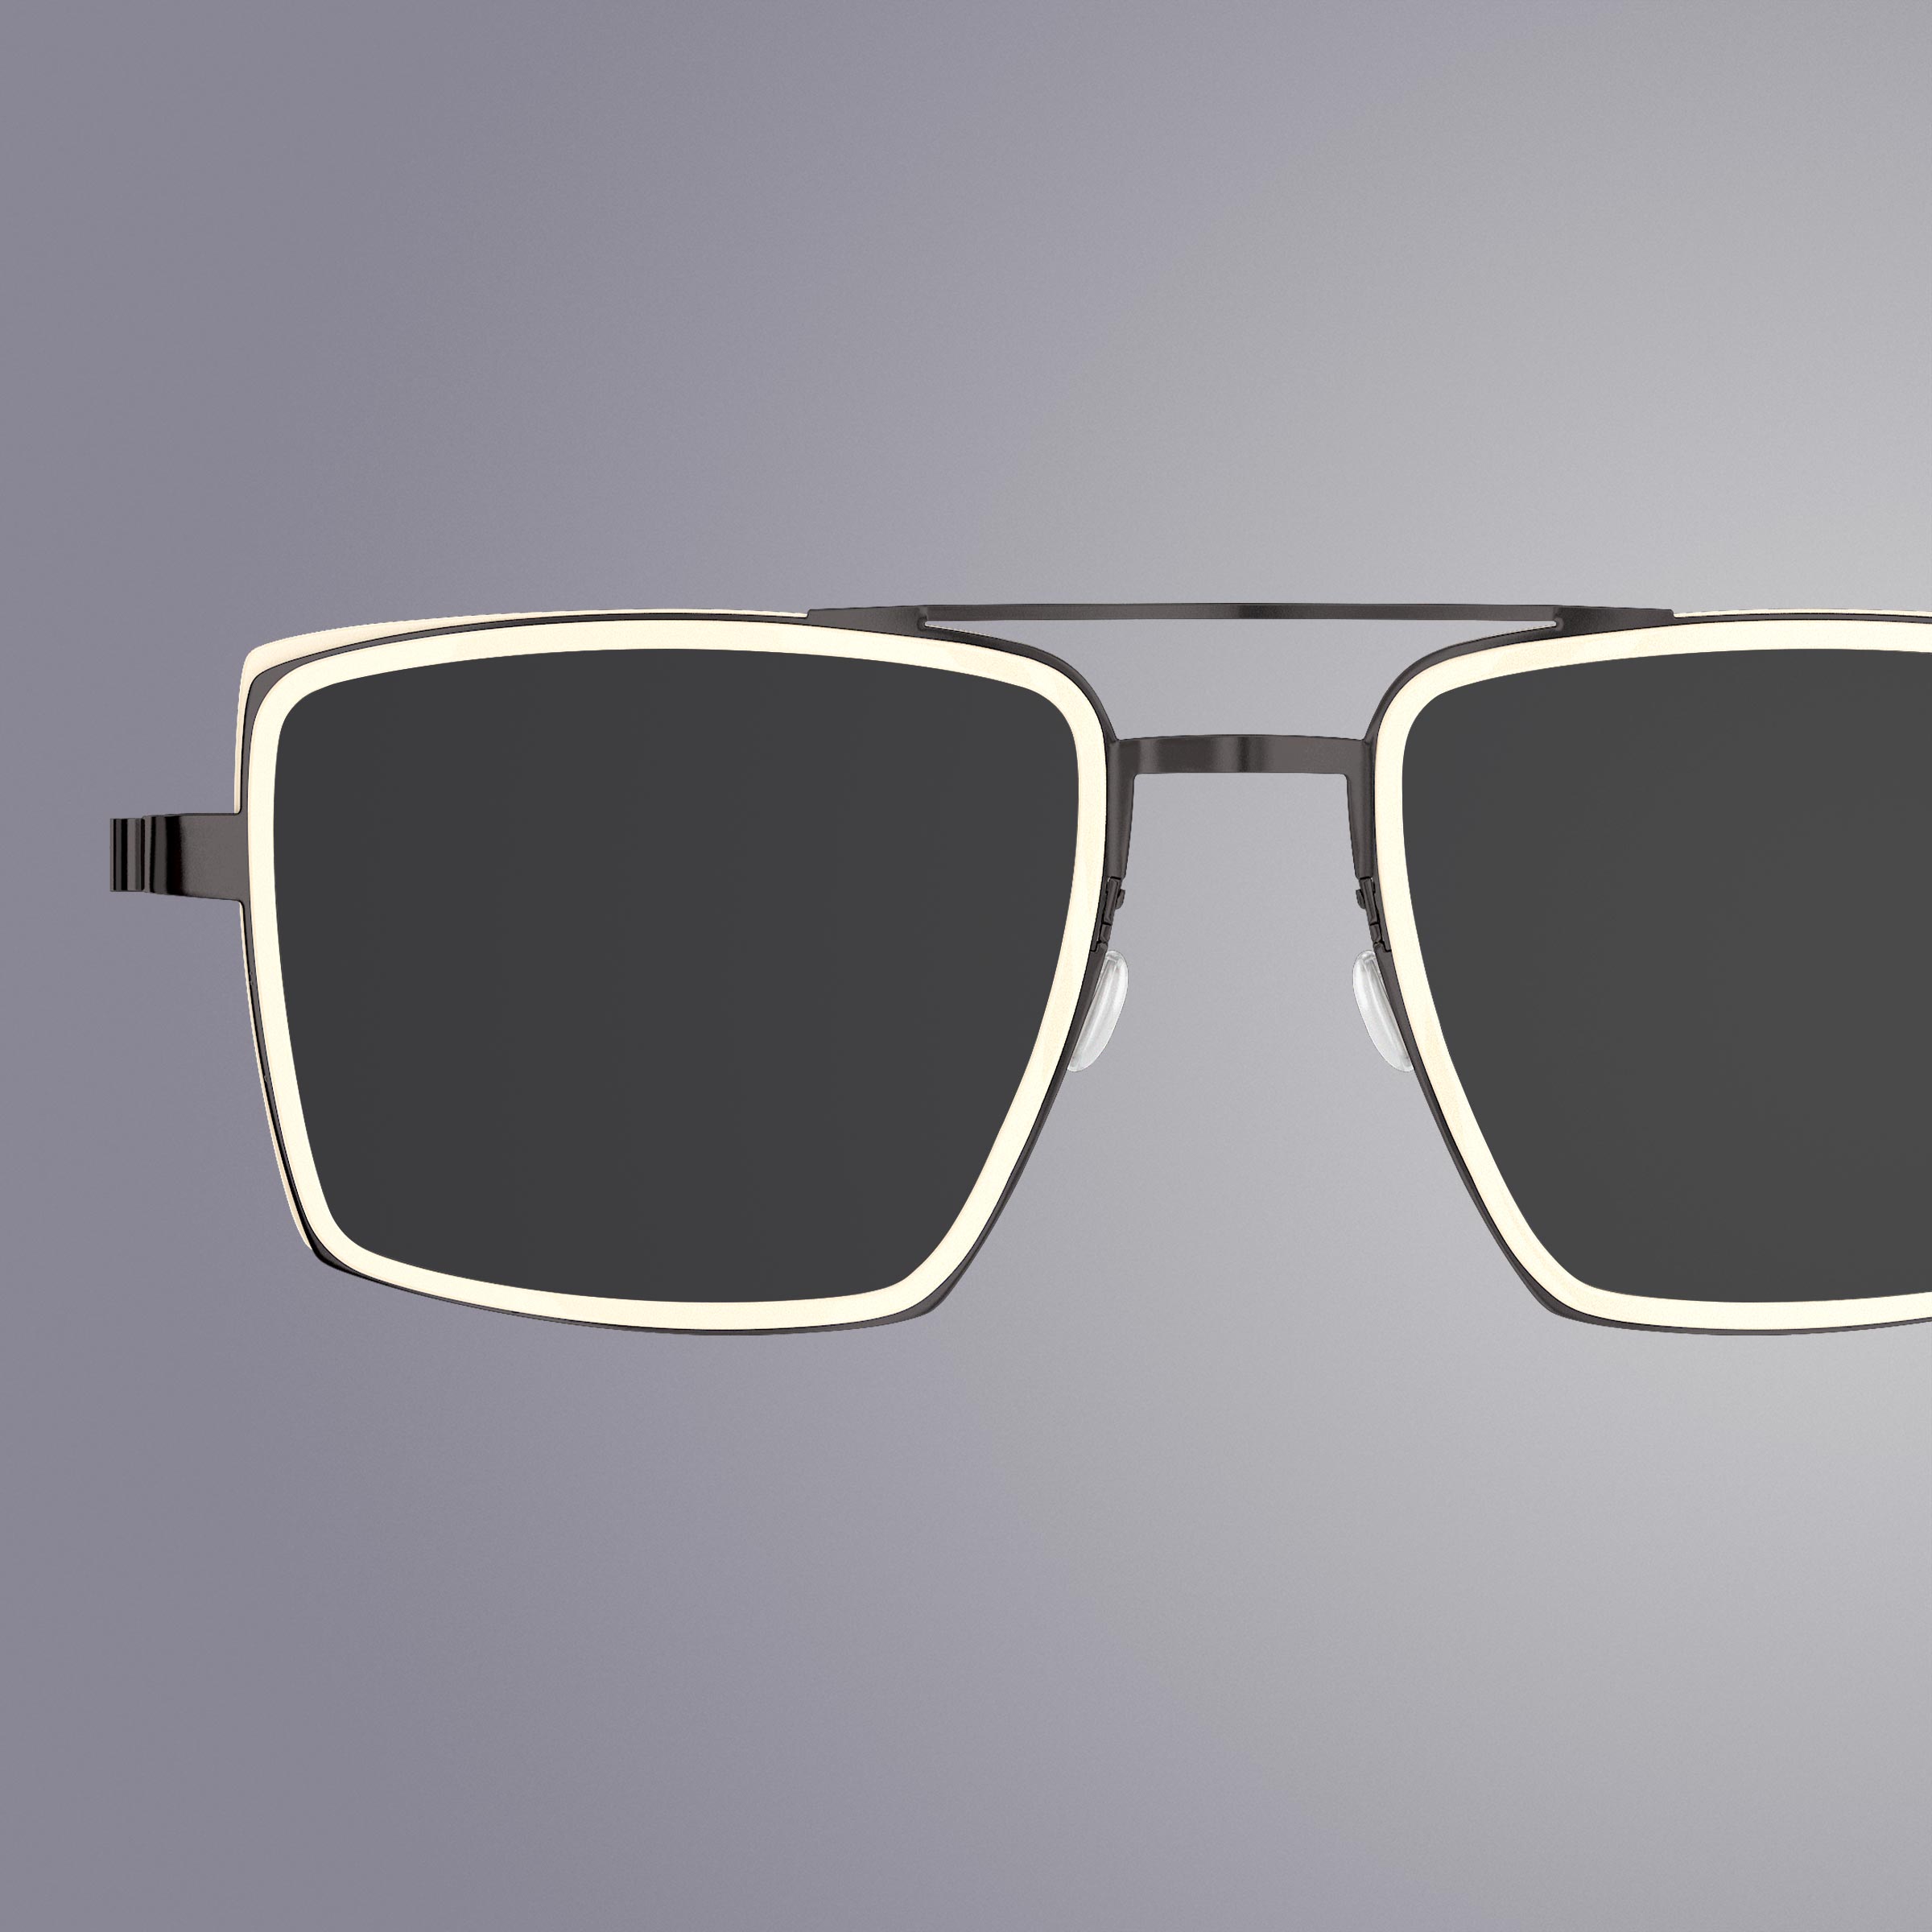 IDEAT magazine featuring LINDBERG square shape black titanium glasses with white inner acetate in Model 8418